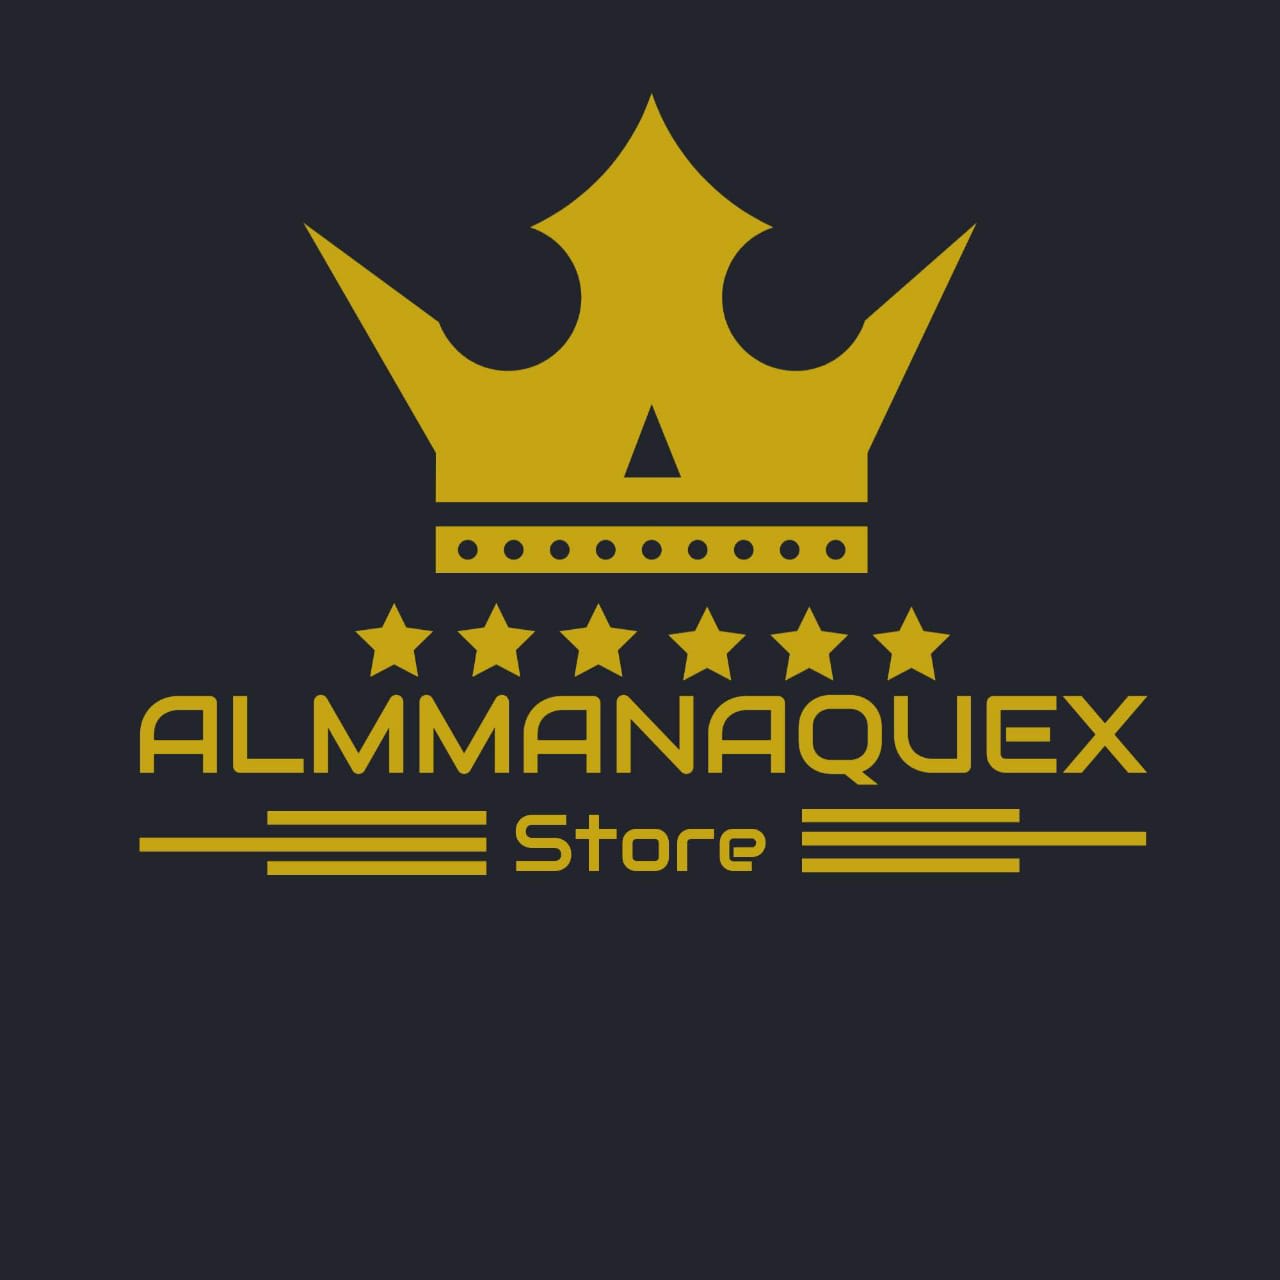 Almmanaquex Store